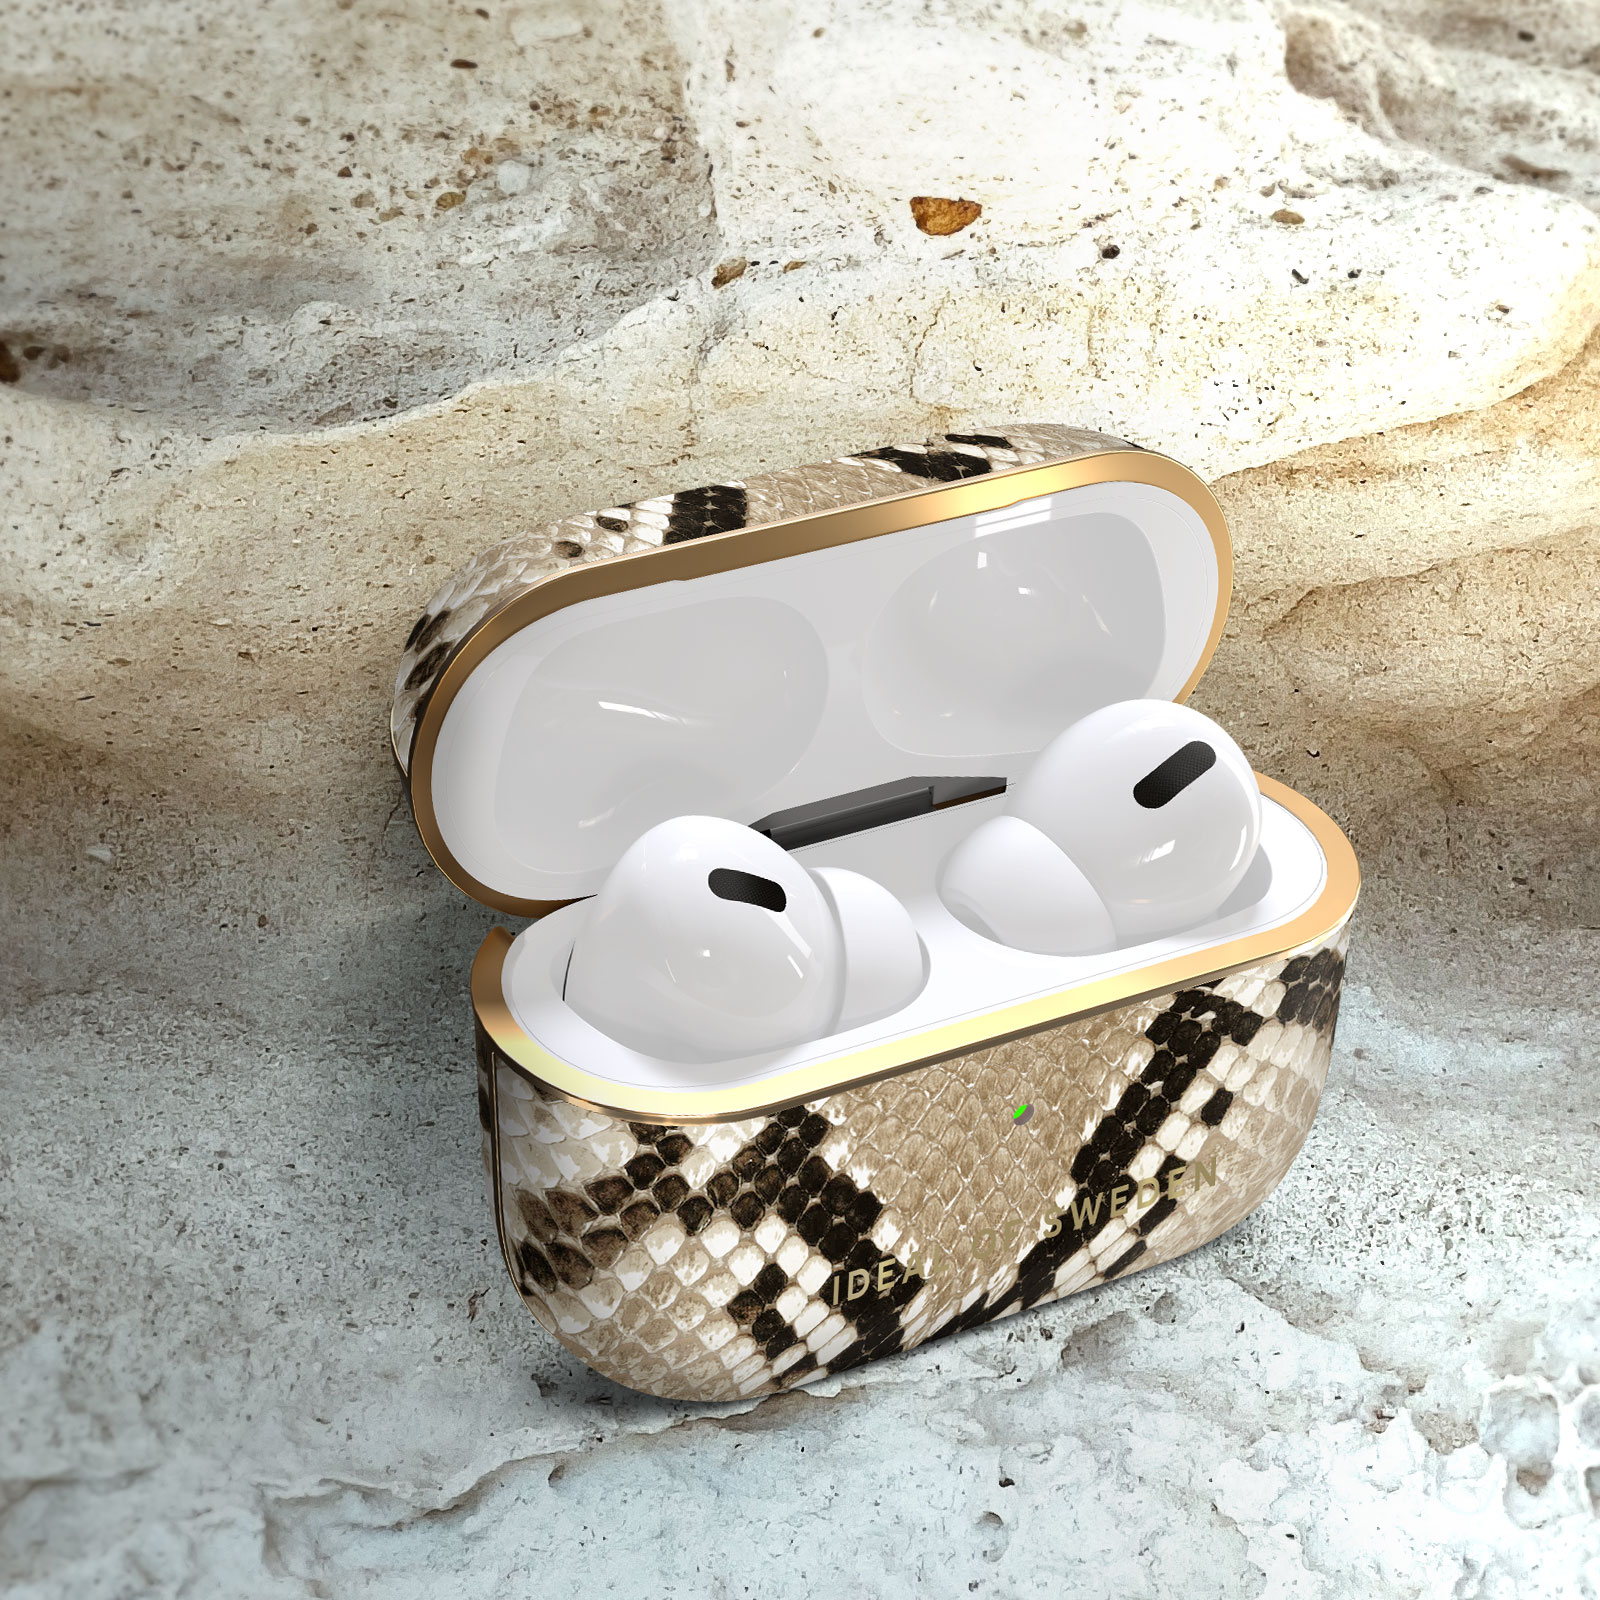 OF AirPod IDEAL für: SWEDEN Cover passend Sahara Snake Full Case IDFAPC-PRO-242 Apple